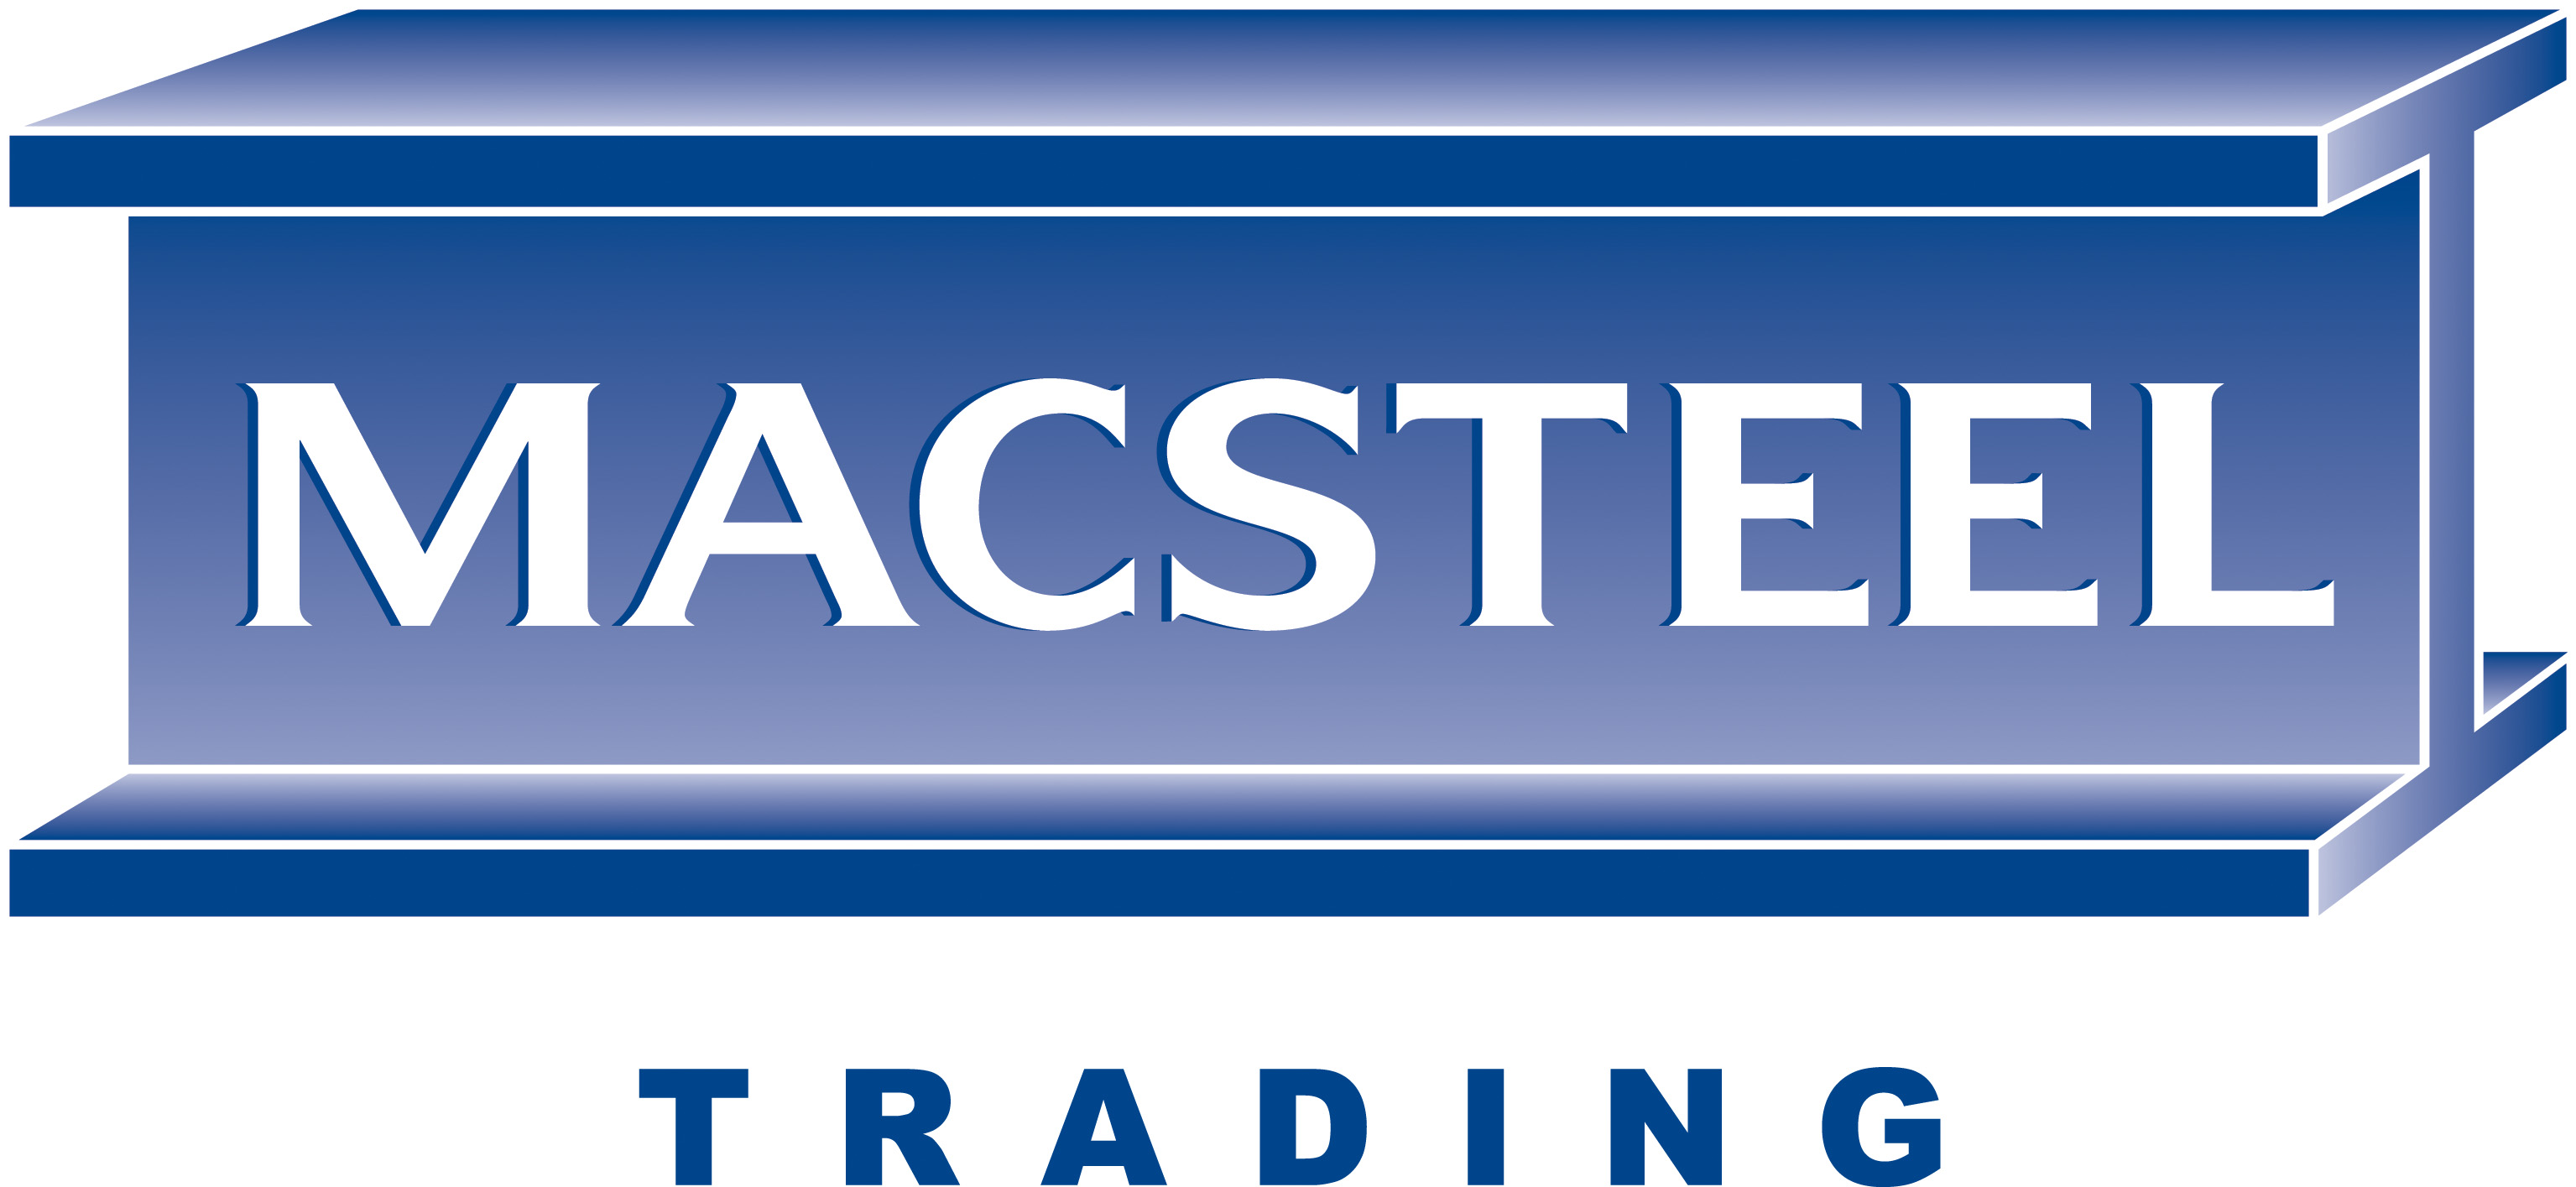 Macsteel Trading - Newcastle logo